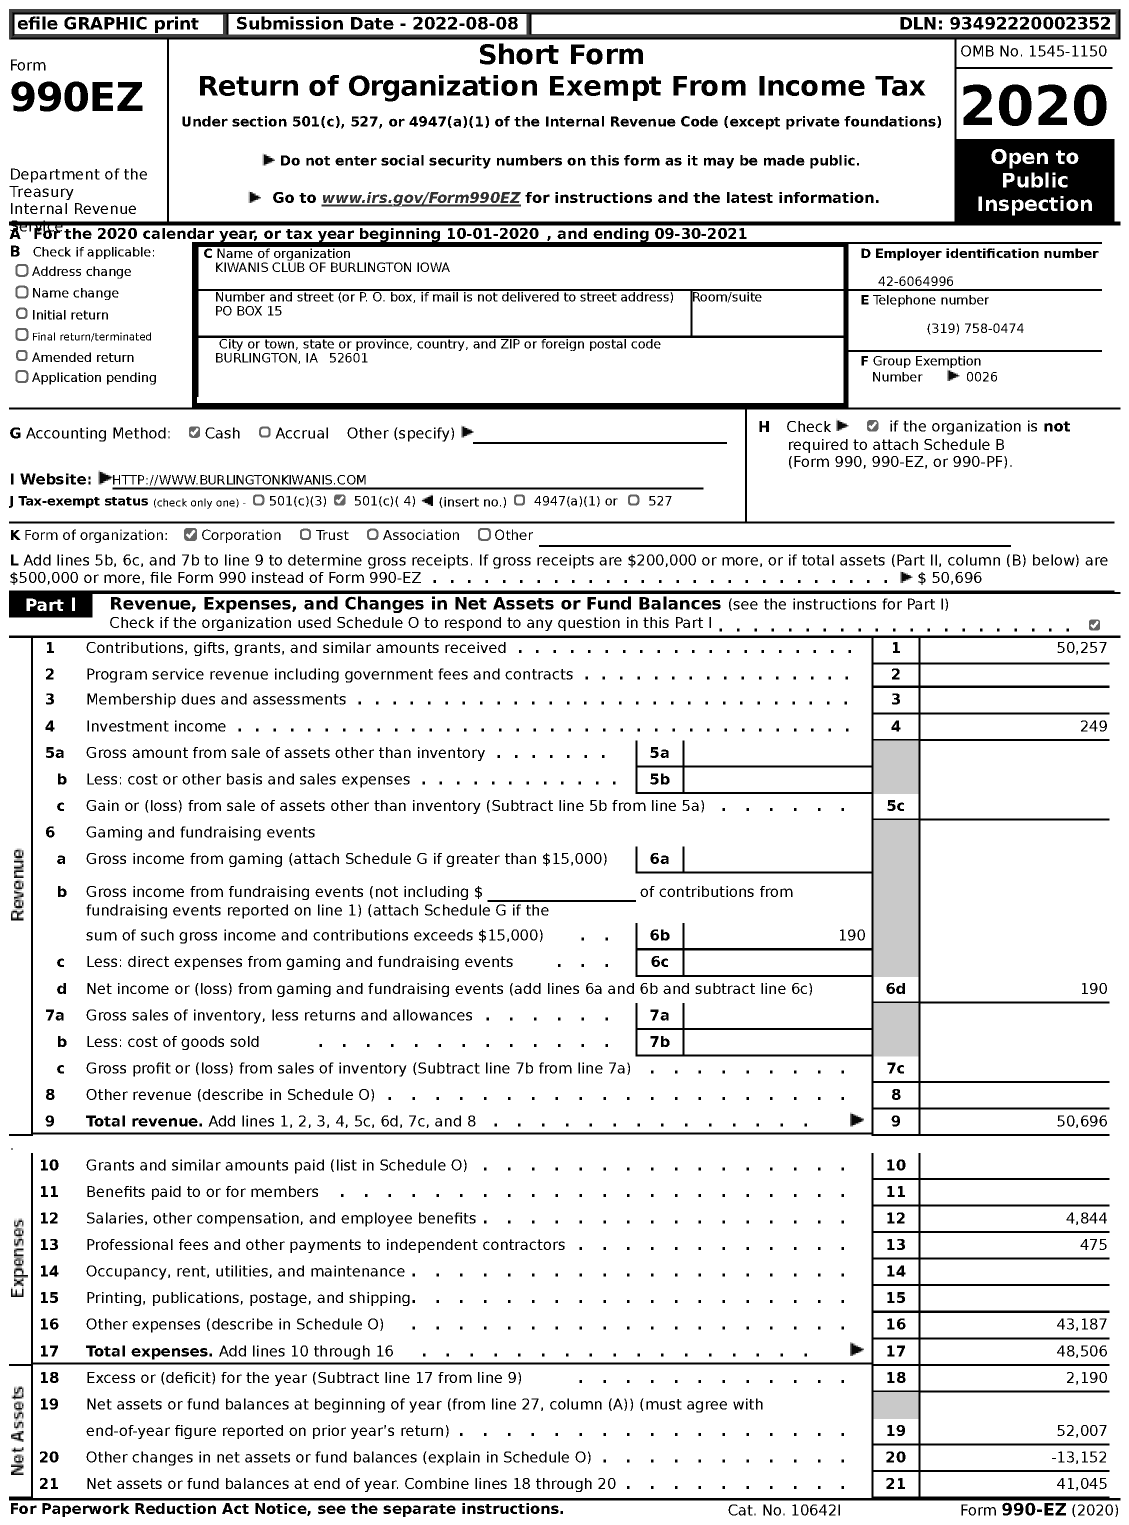 Image of first page of 2020 Form 990EZ for Kiwanis International - K01021 Bulrington